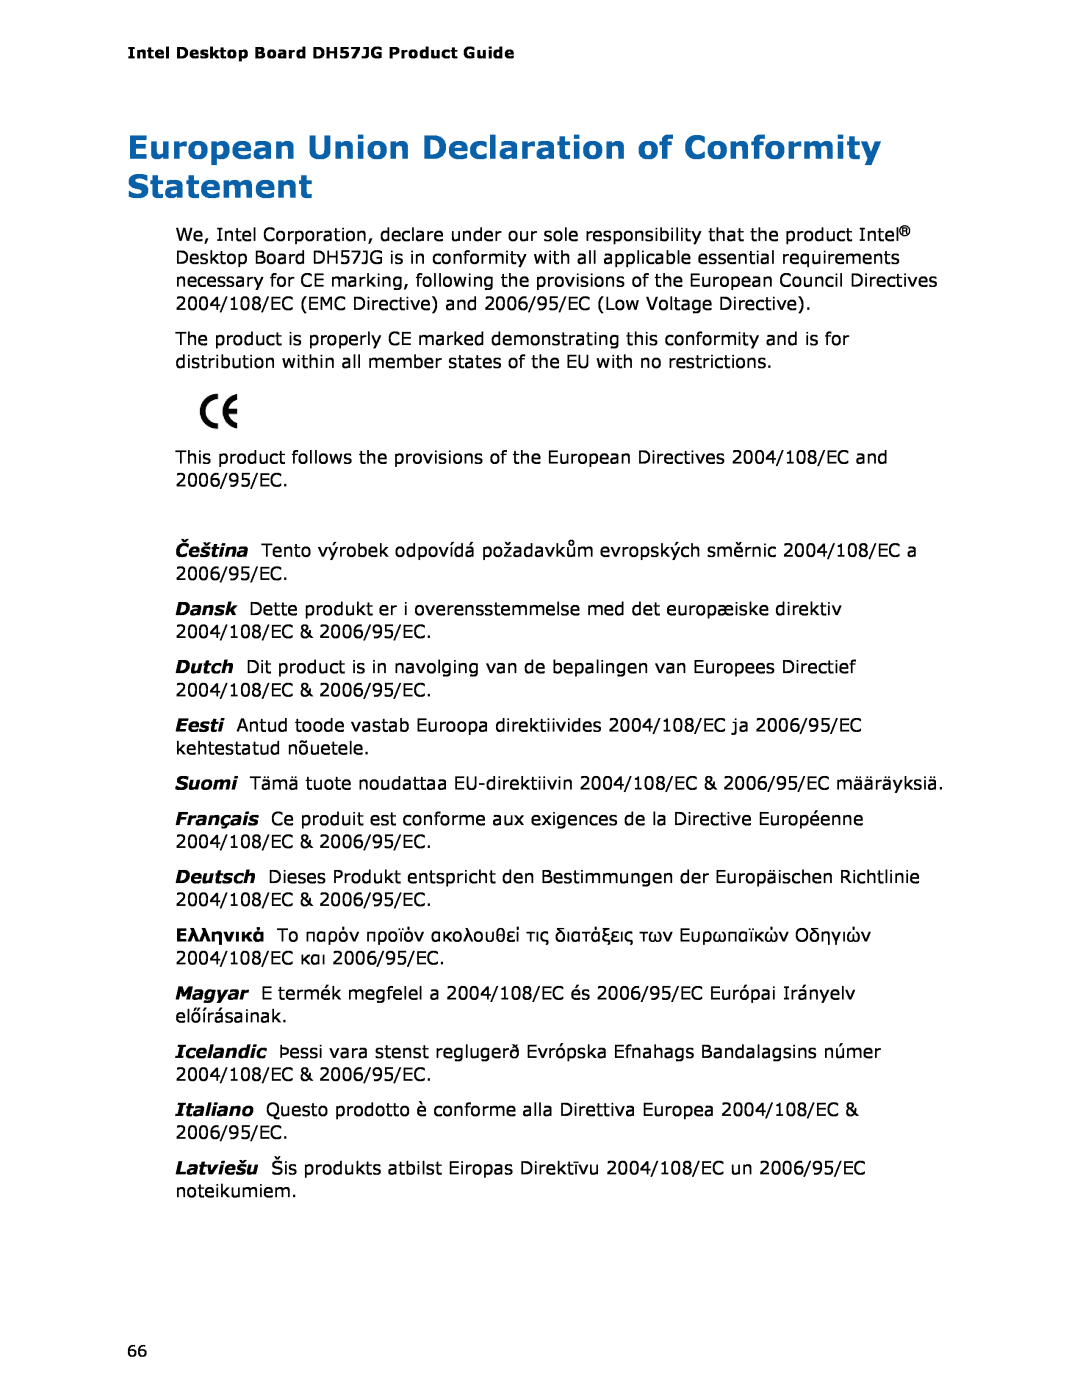 Intel BLKDH57JG manual European Union Declaration of Conformity Statement 